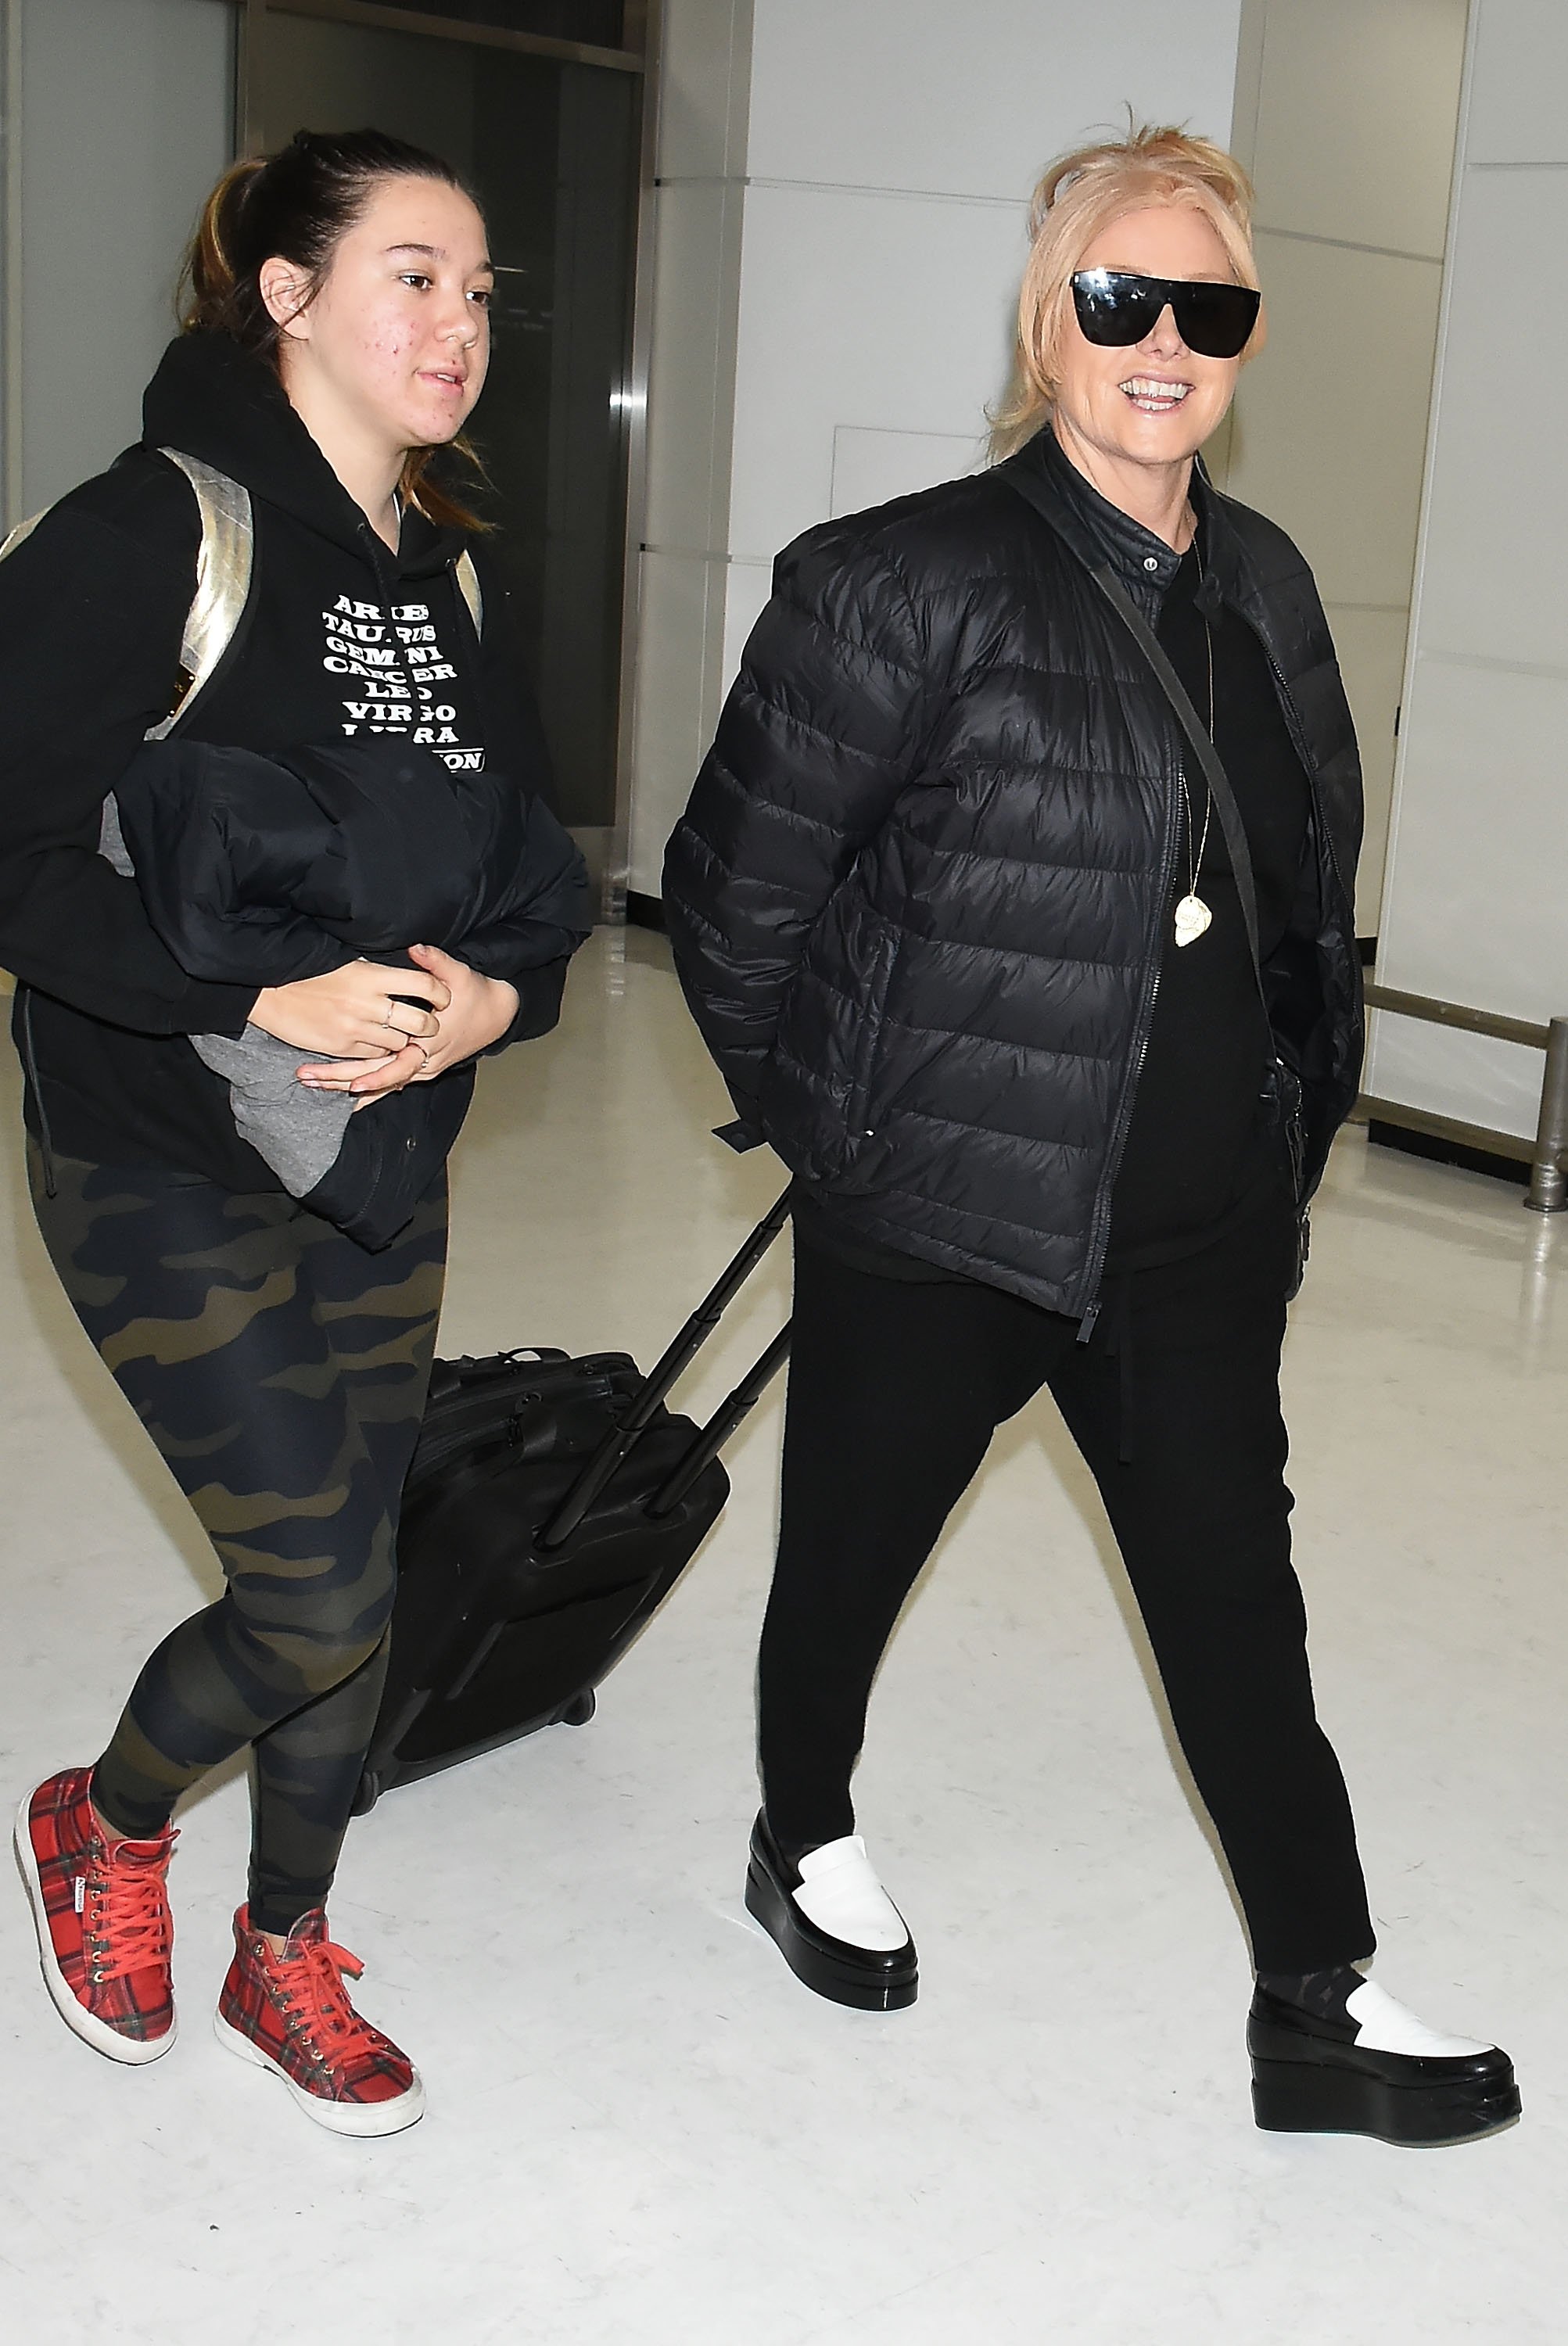 Ava Eliot Jackman and Deborra-Lee Furness at Narita International Airport Japan on January 20, 2019 | Source: Getty Images